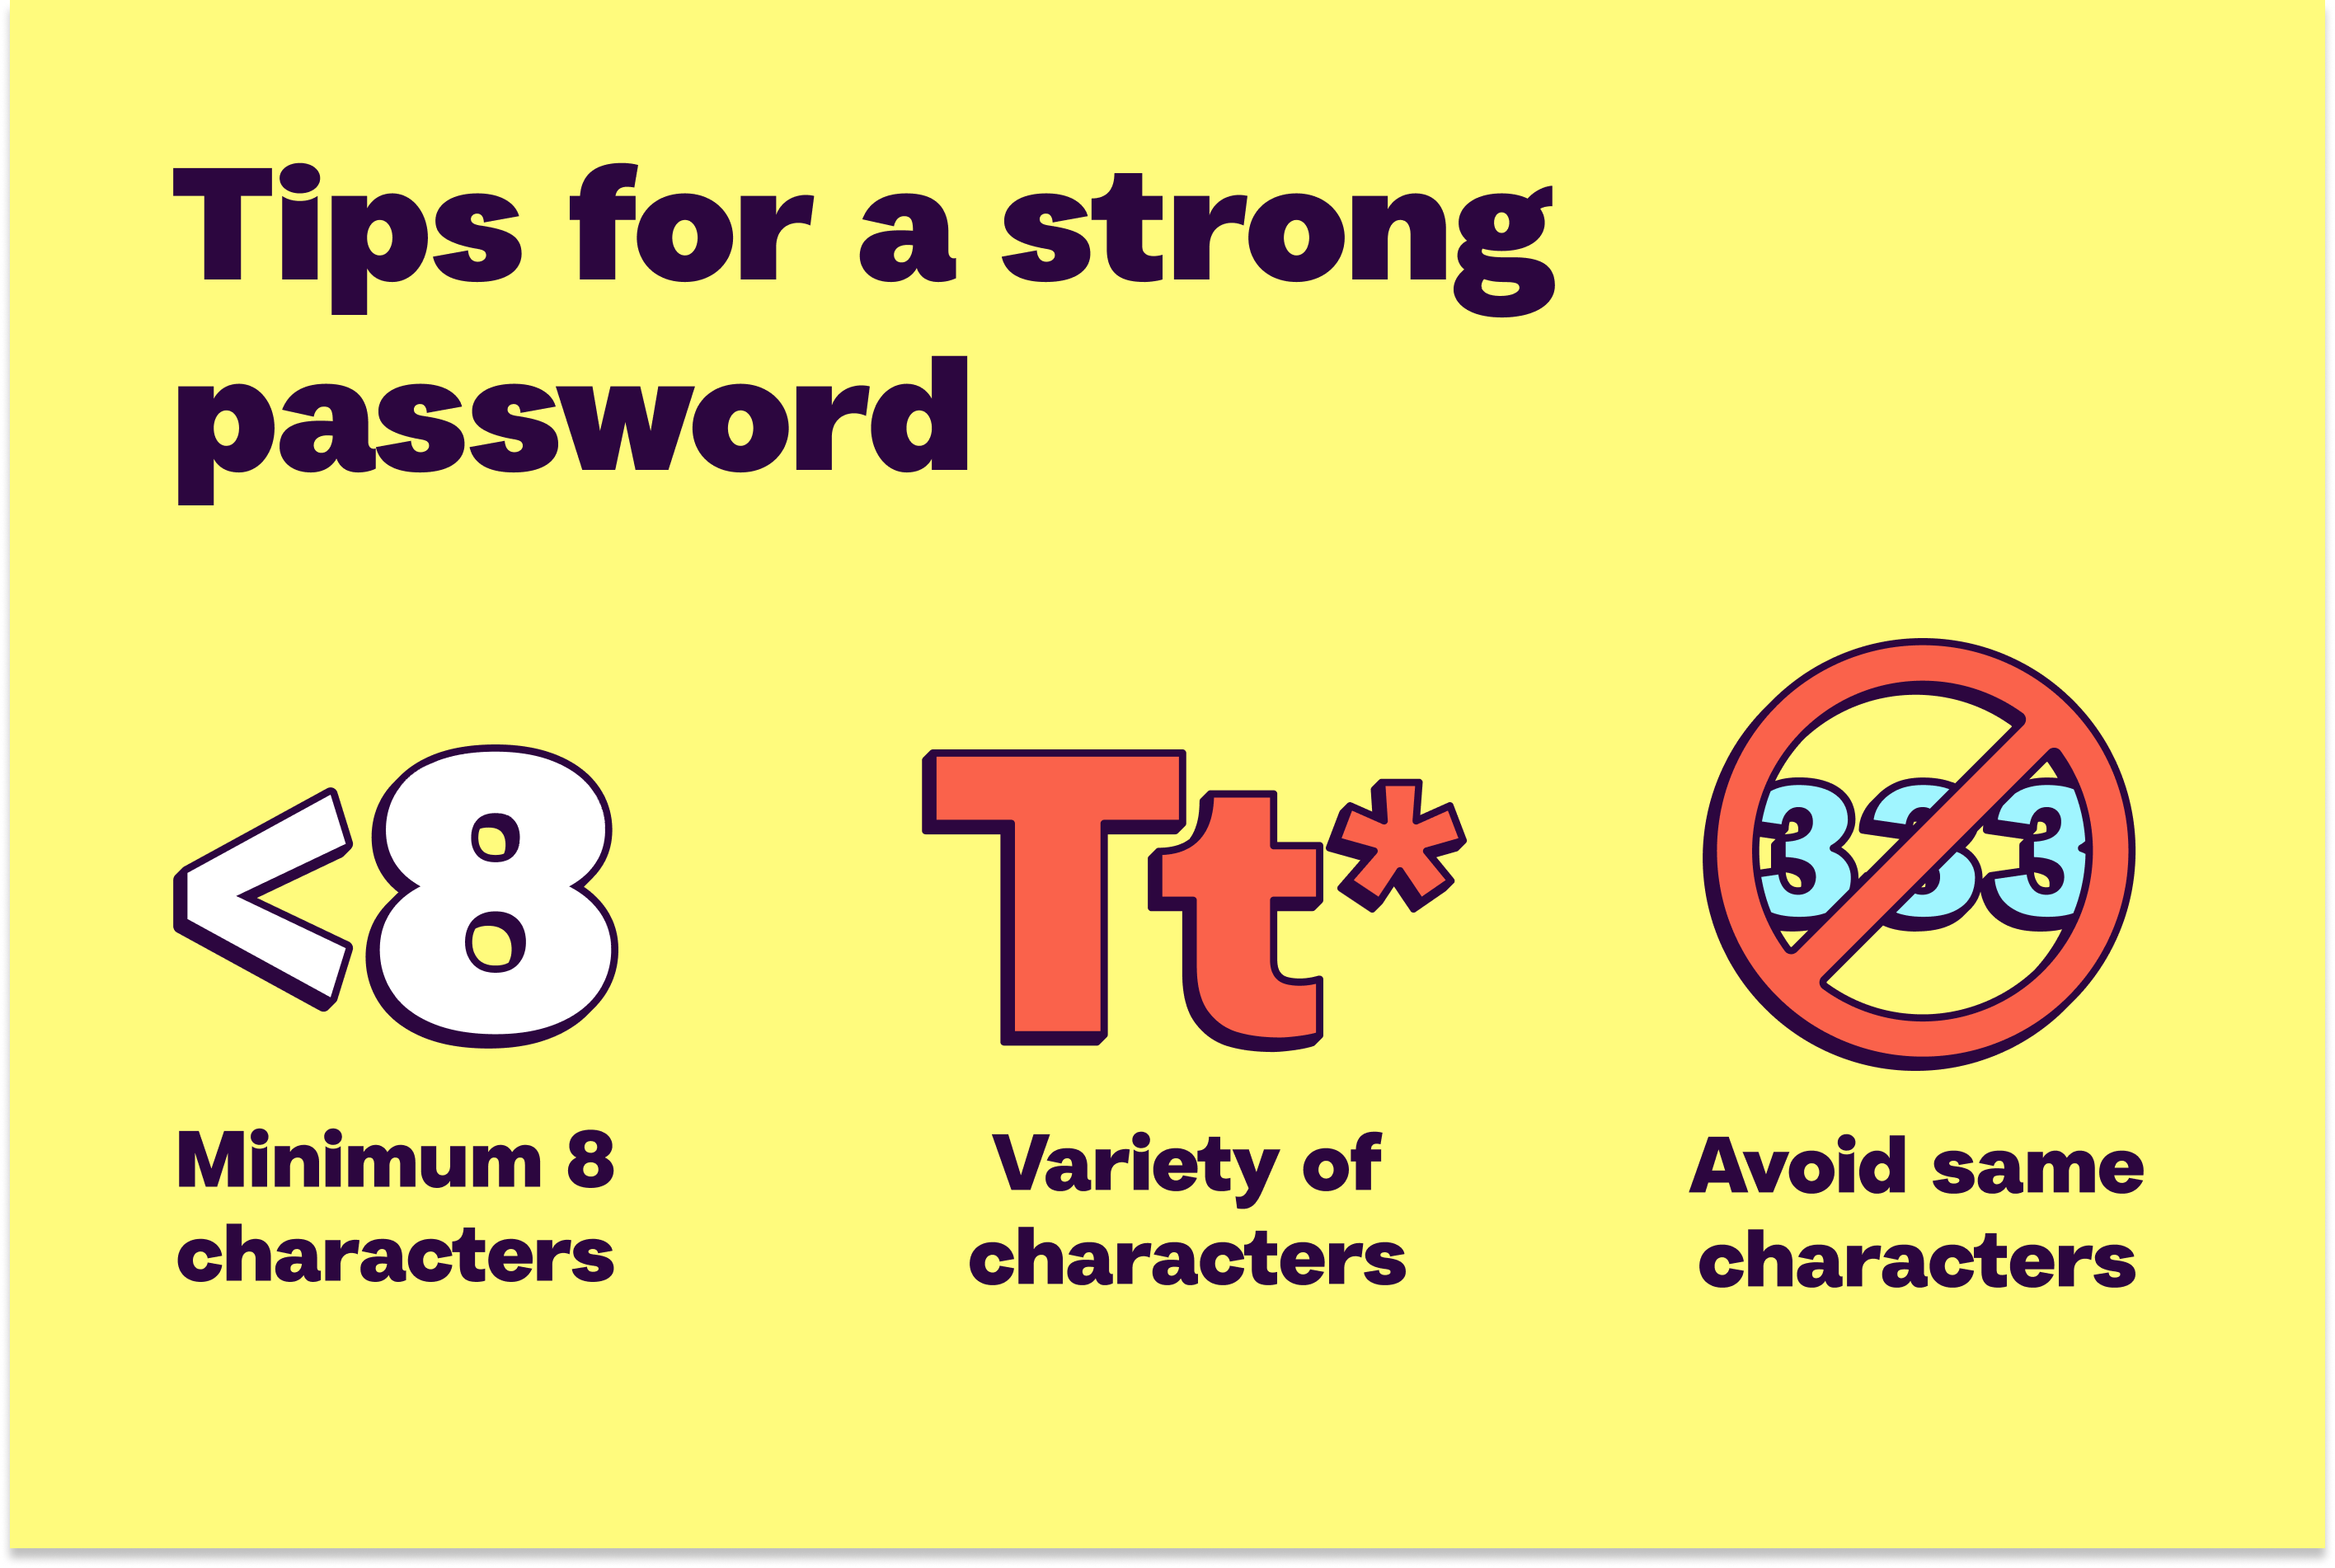 password tip image for newsletter